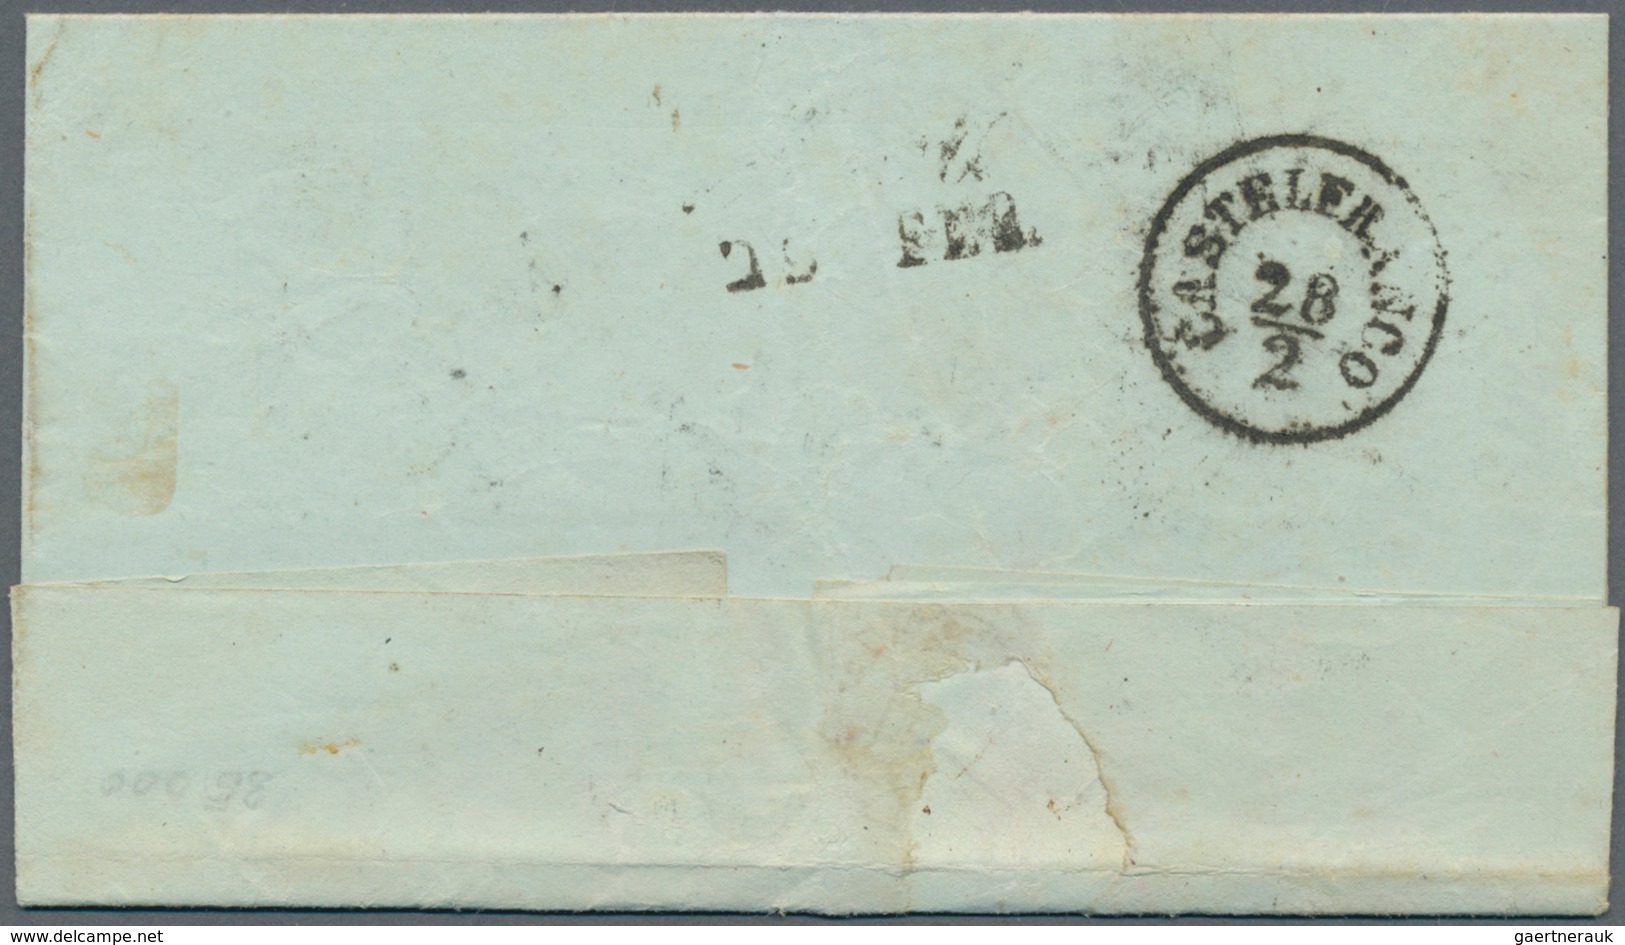 Österreich - Lombardei Und Venetien - Stempelmarken: 1856. 15 Centesimi "Buchdruck", Stempelmarke Po - Lombardy-Venetia